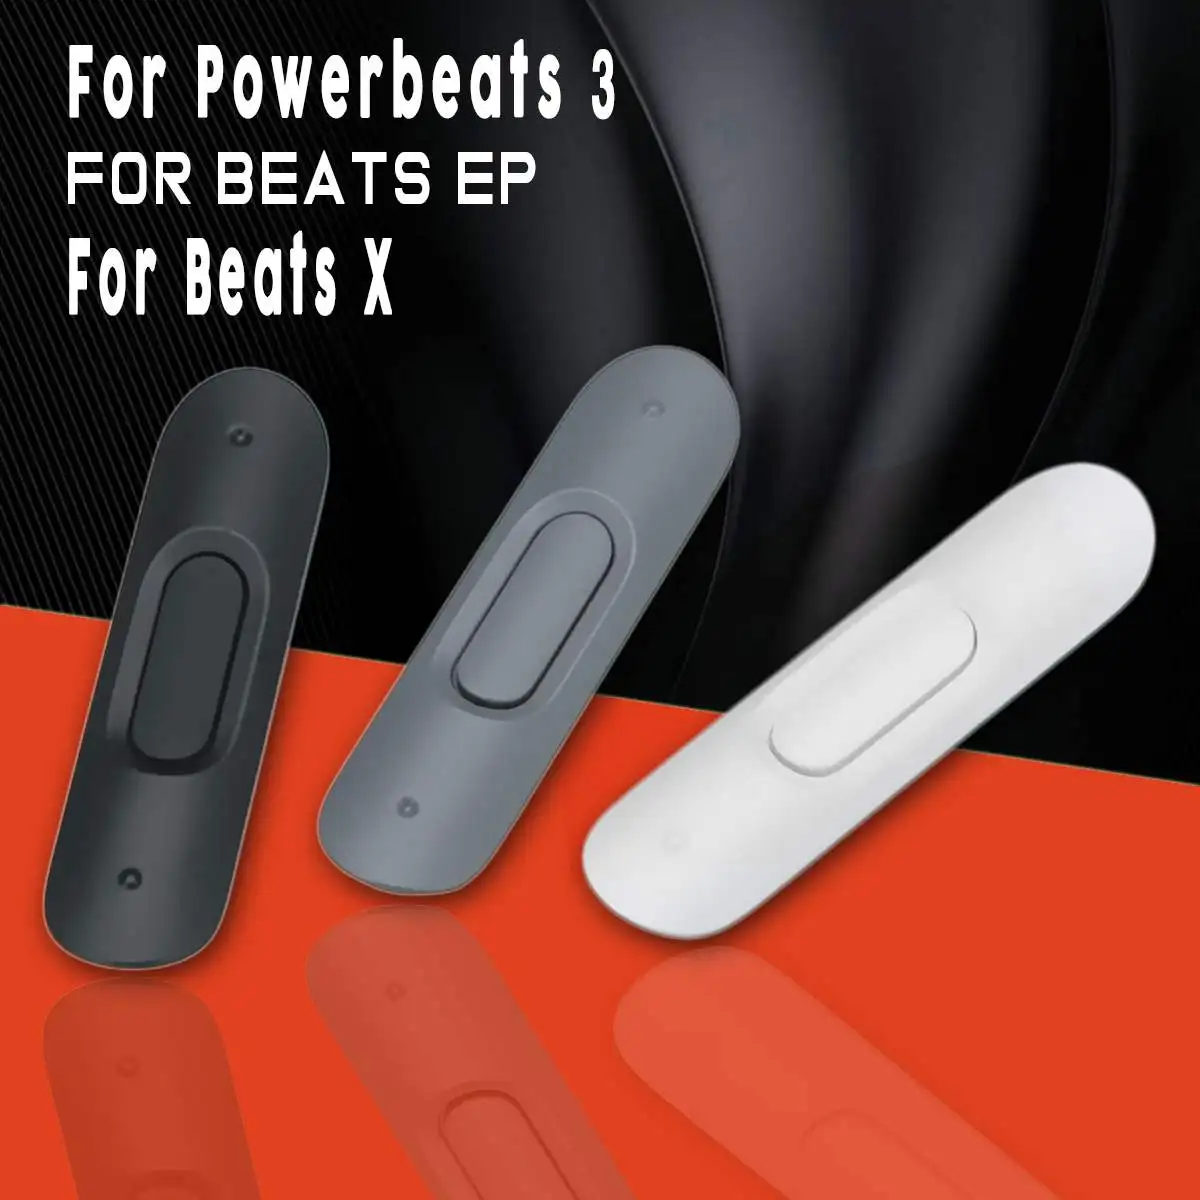 beats x or powerbeats